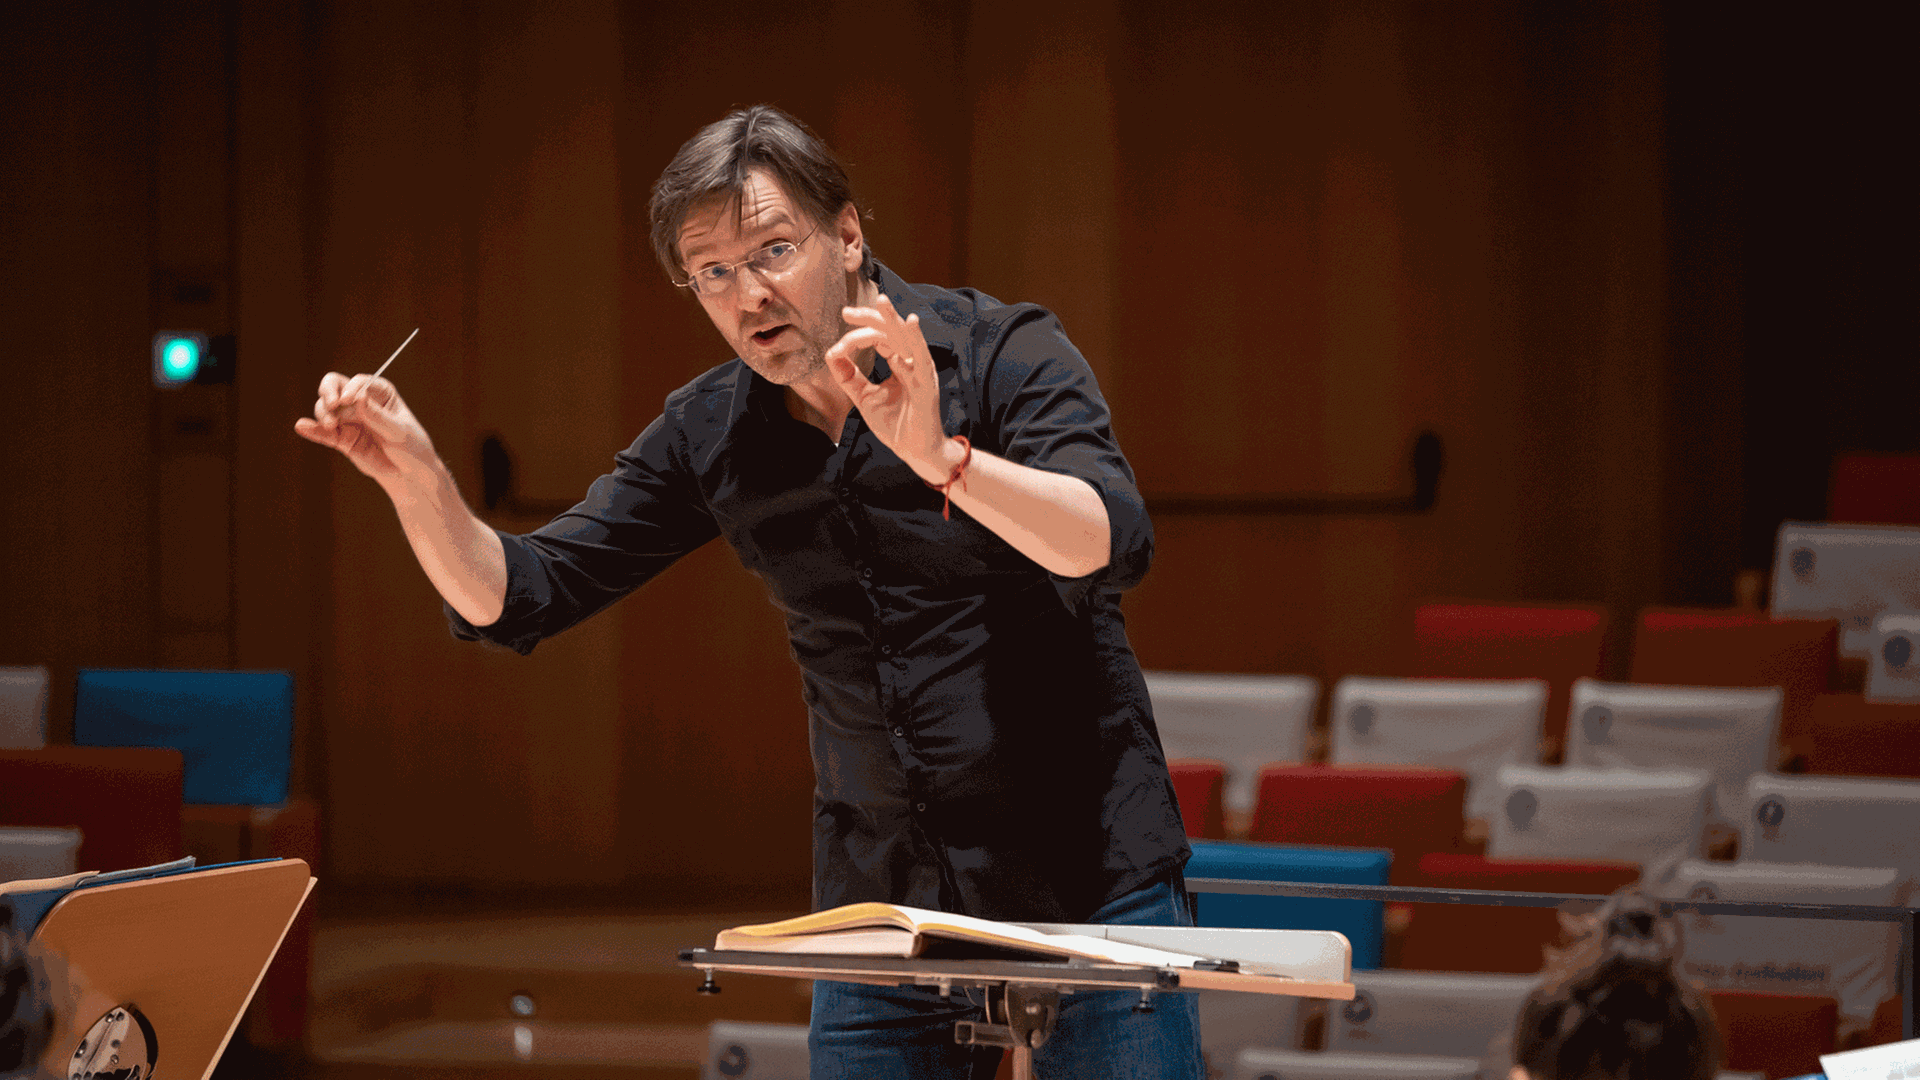 Der Dirigent Tomáš Netopil dirigiert die Dresdner Philharmonie am 26.3.21.